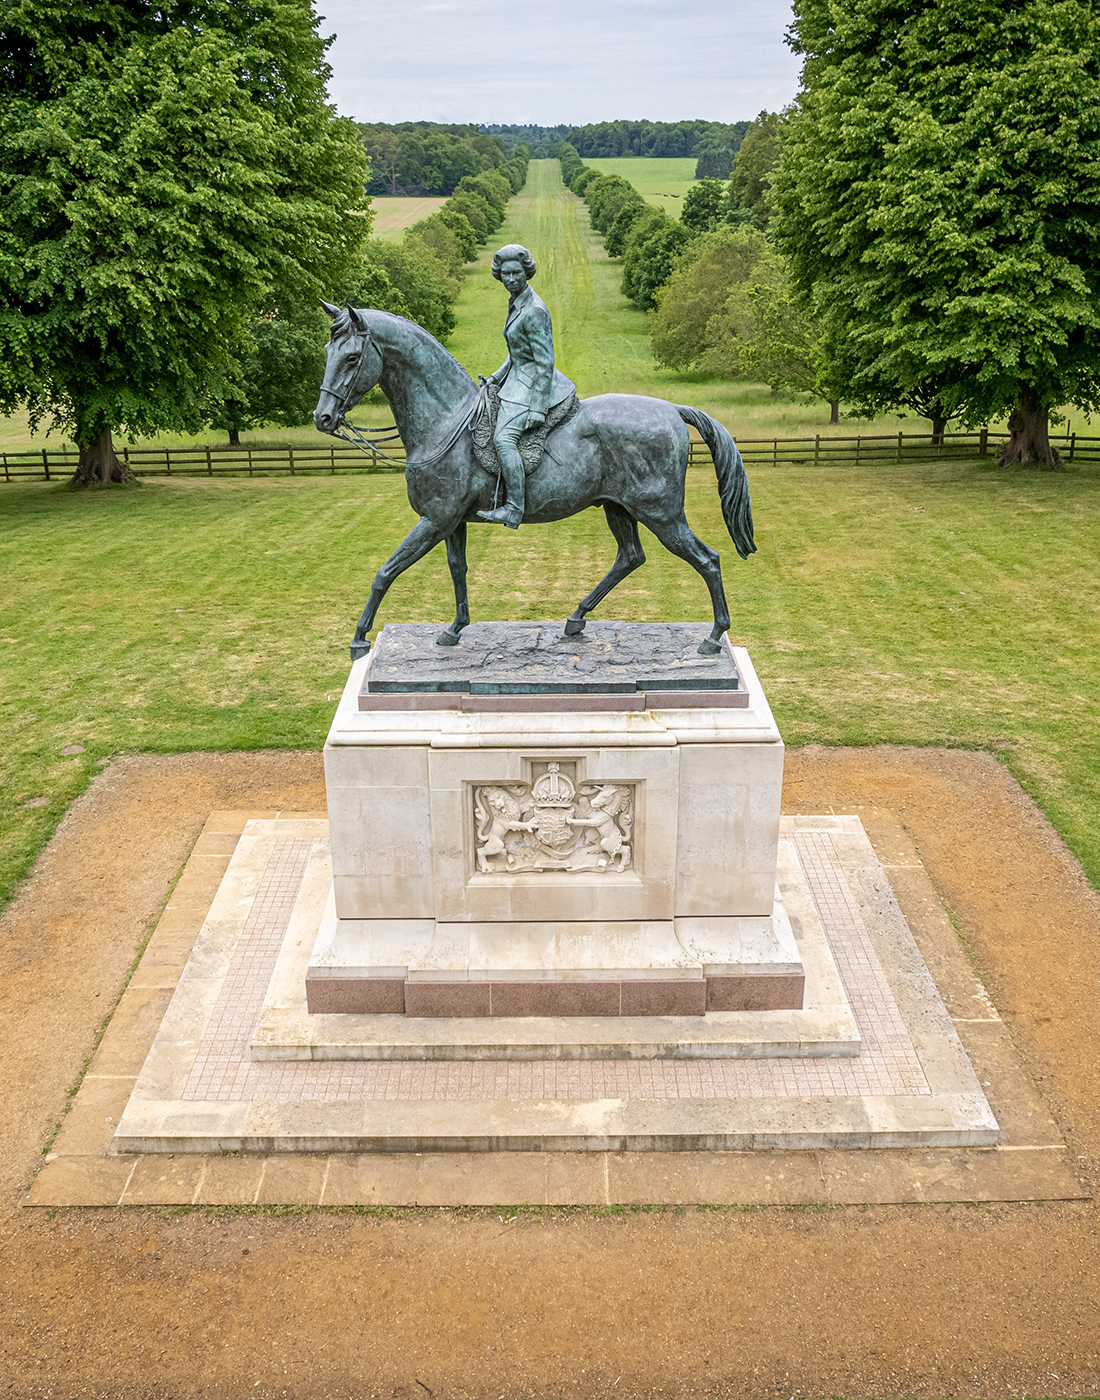 The Jubilee Statue of Queen Elizabeth II on horseback.